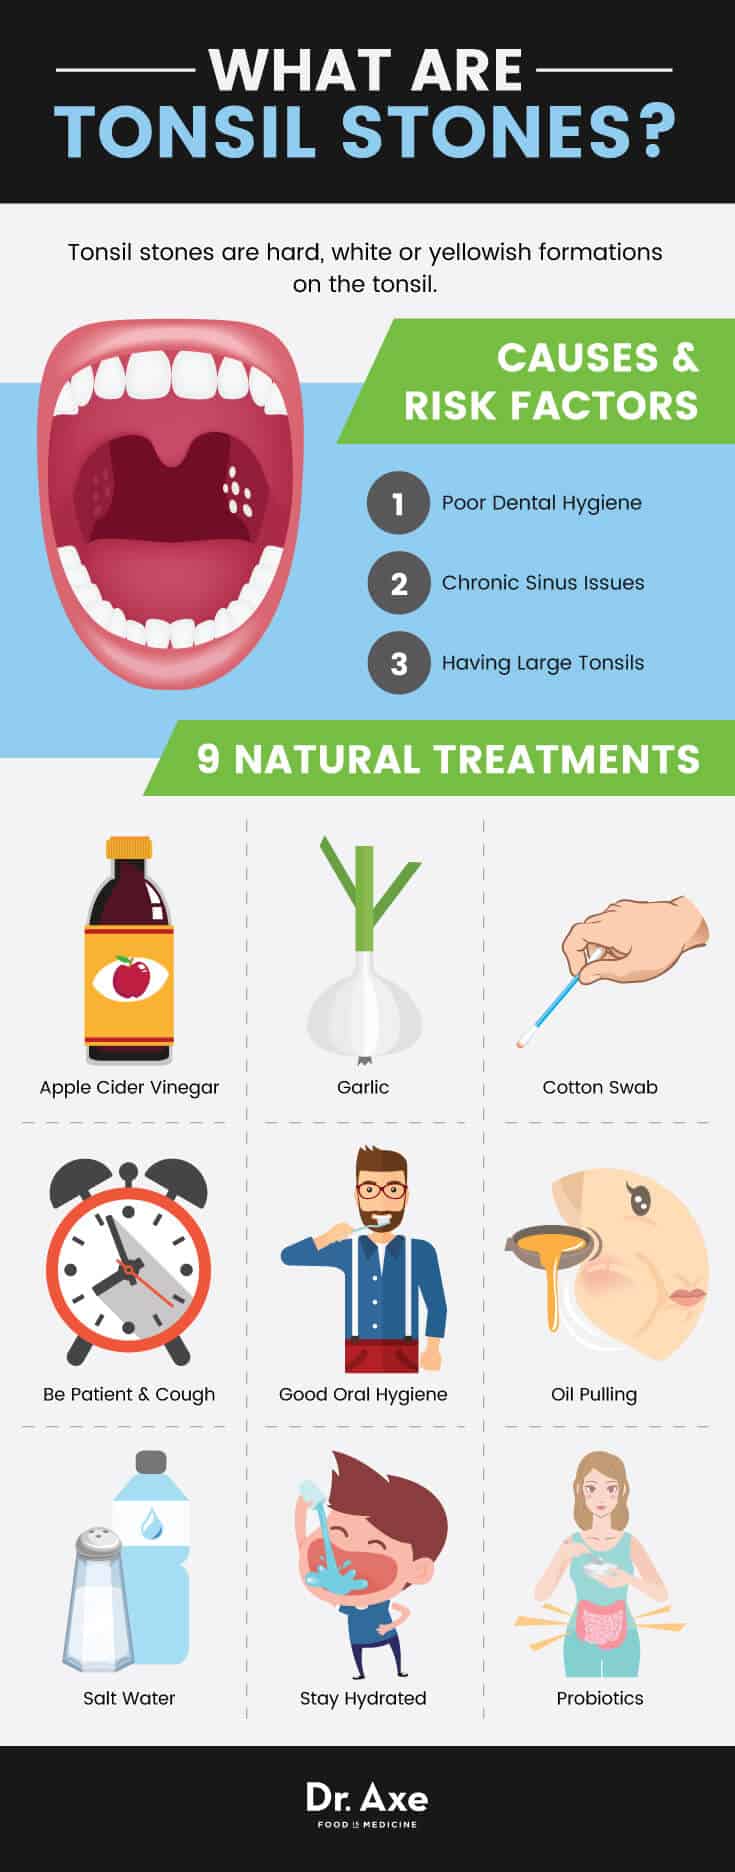 Tonsil stones natural treatments